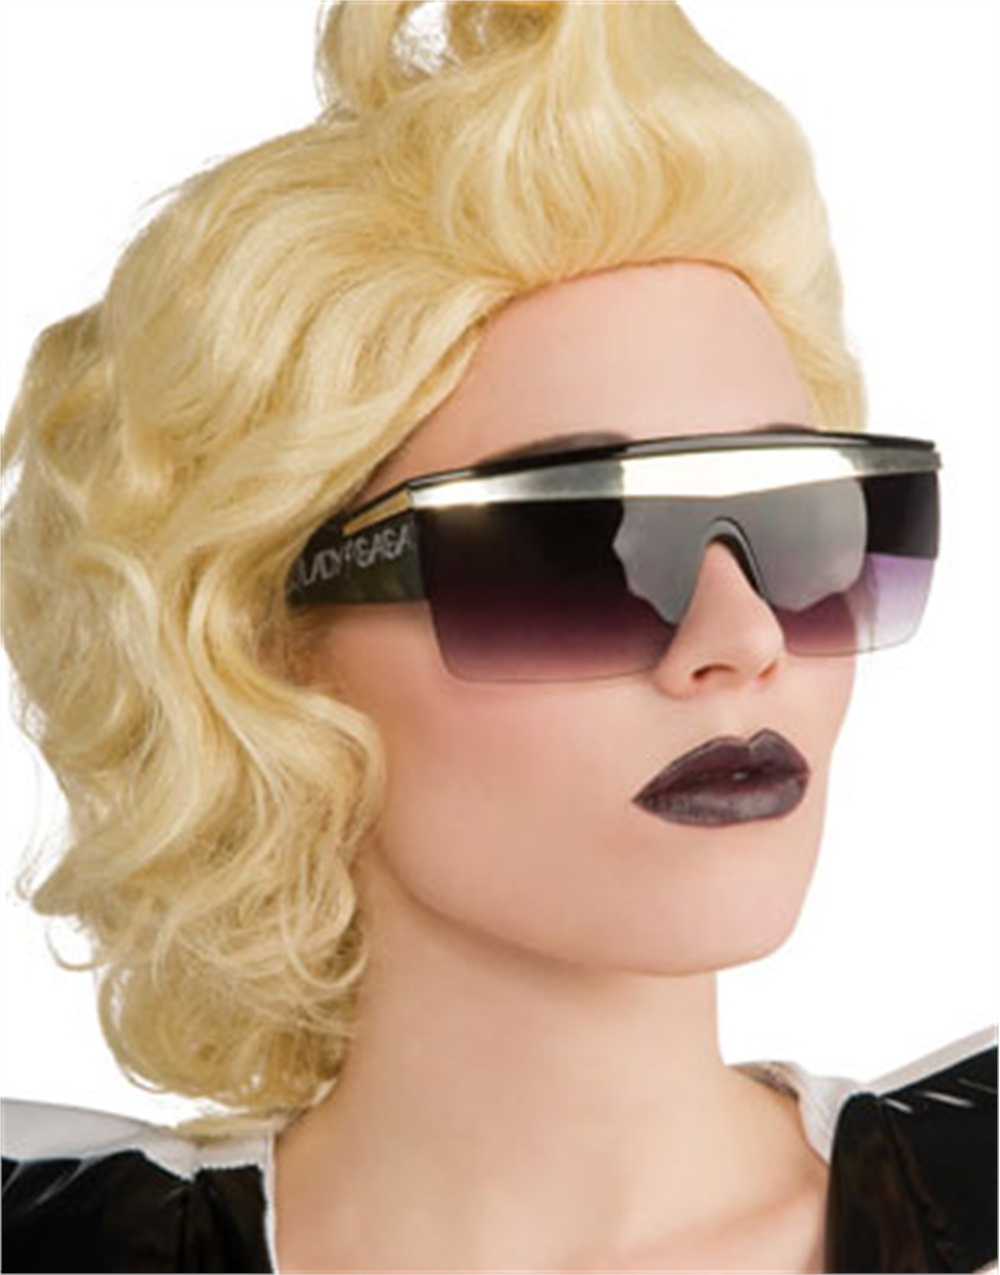 Lady Gaga Men's Lady Gaga Retro Glasses Costume Accessory Black - image 2 of 2